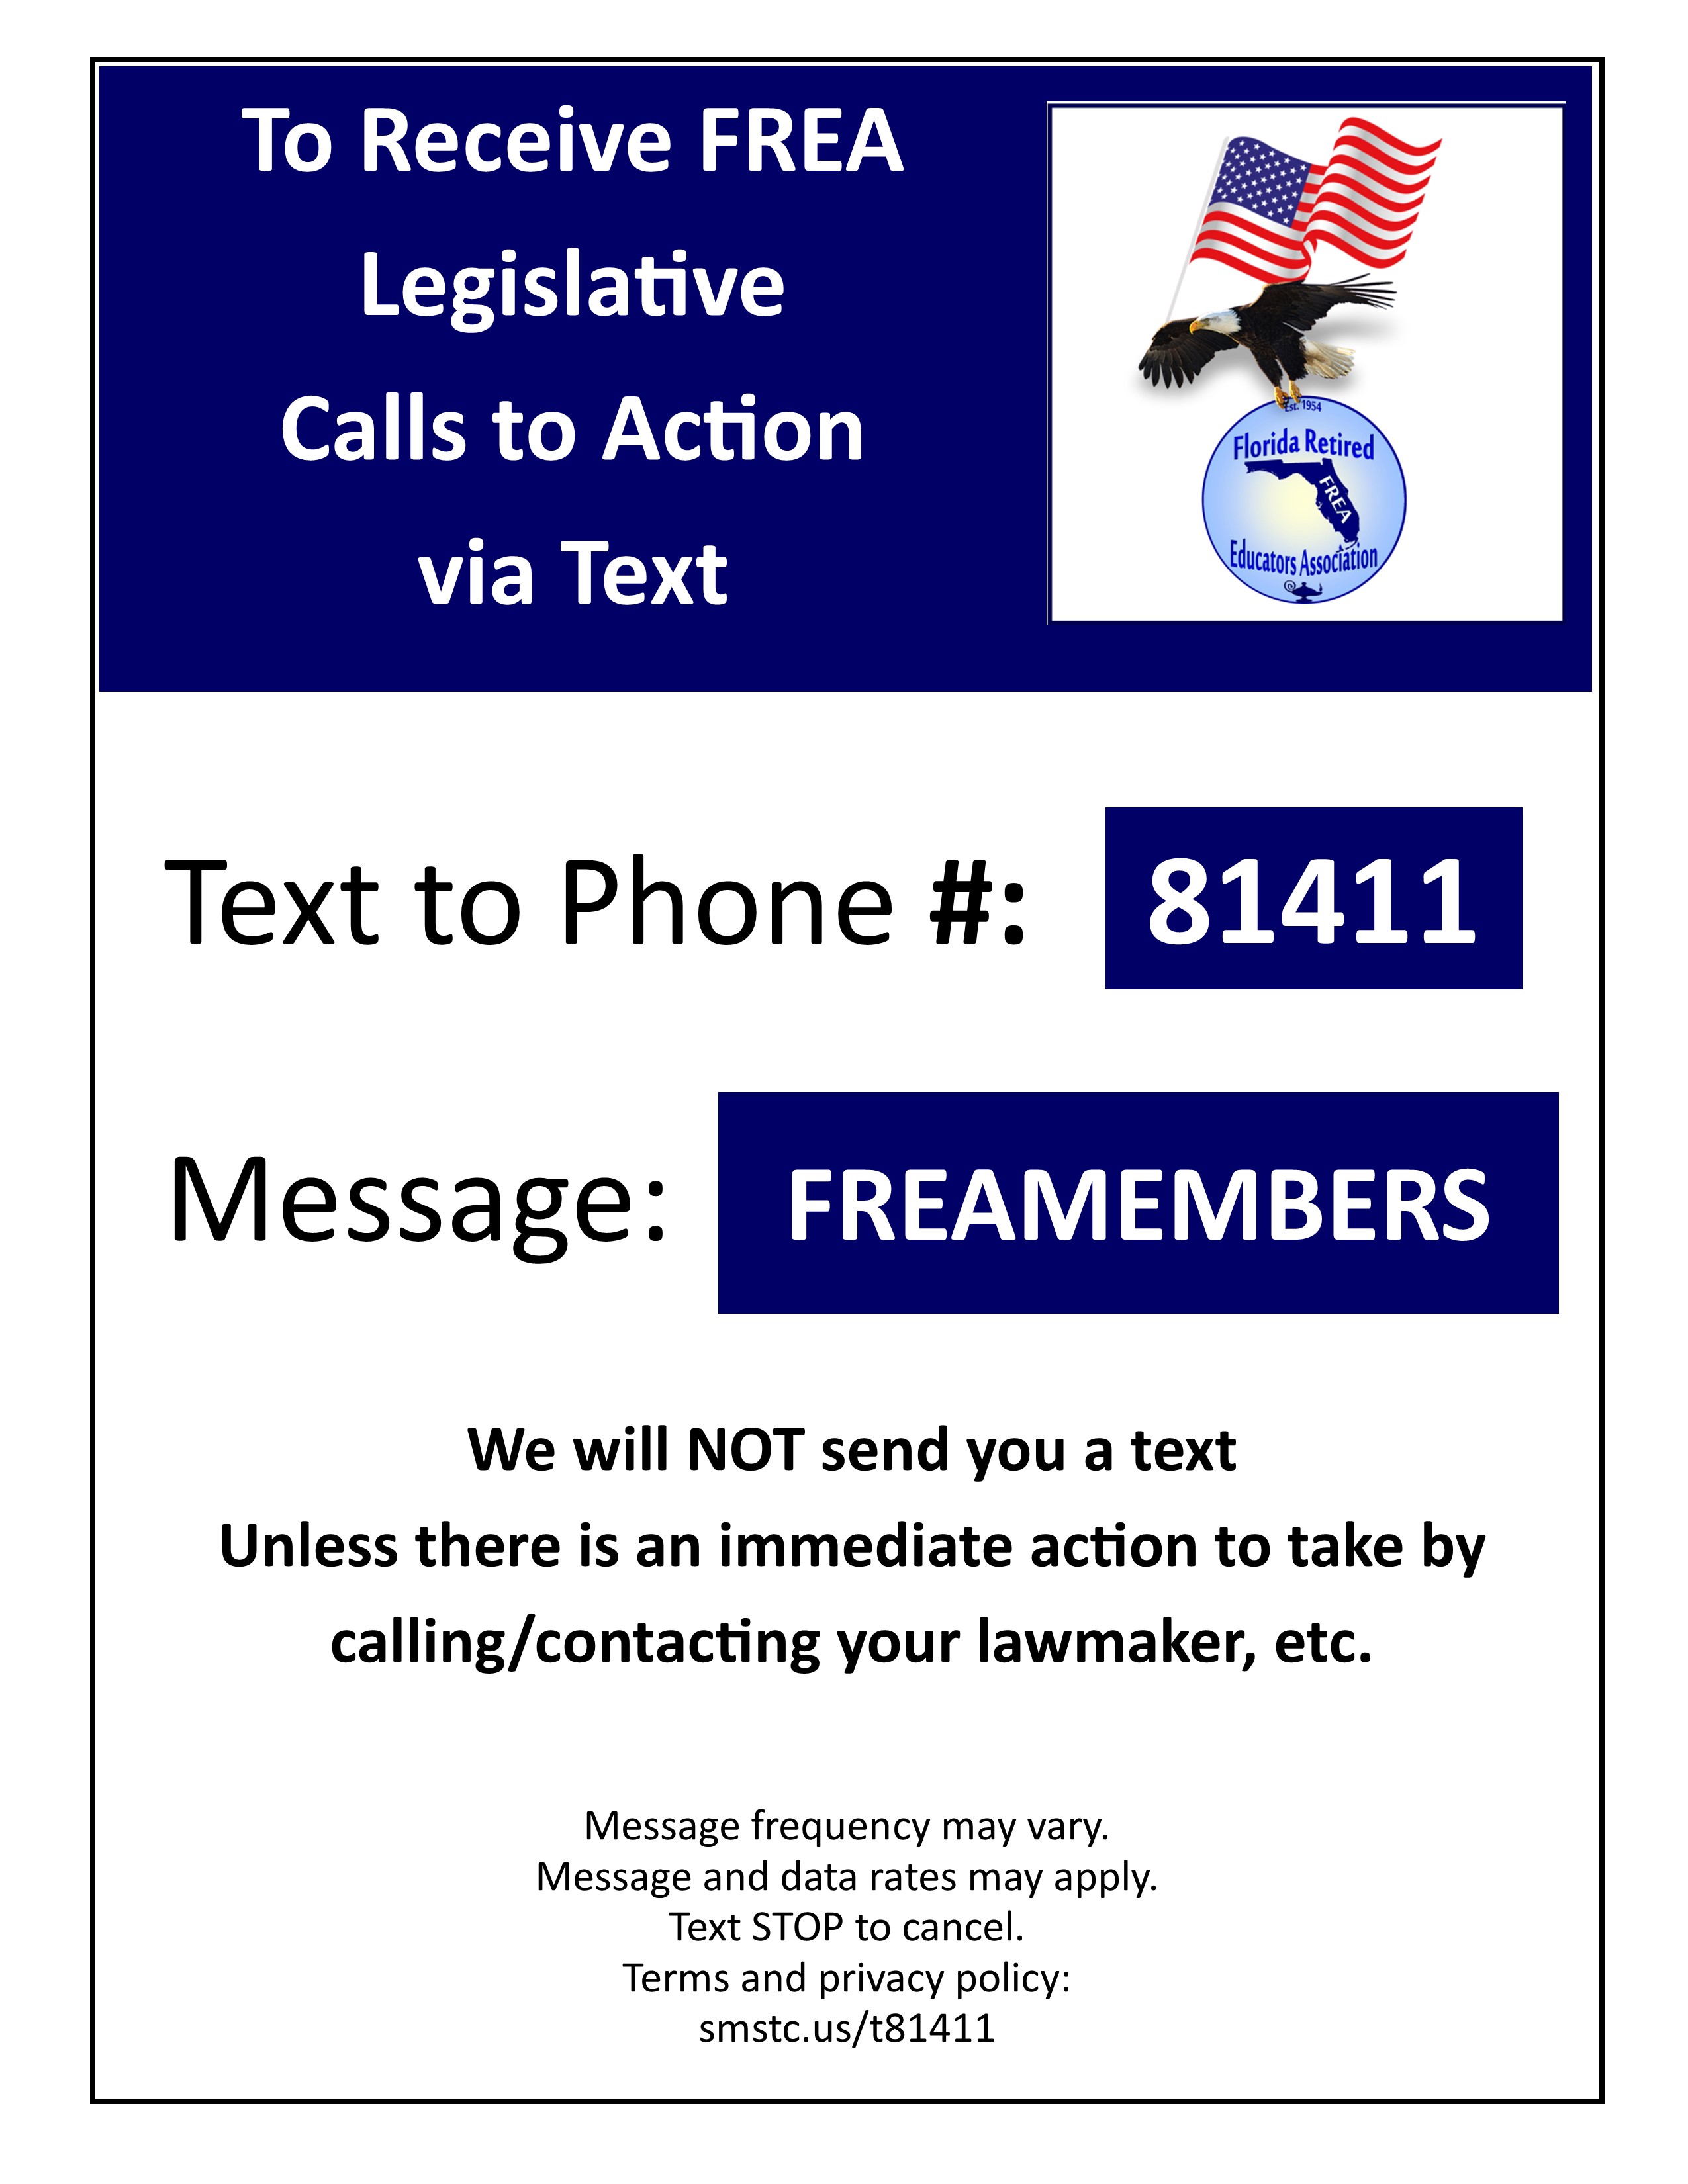 Legislative Text Opt-In message